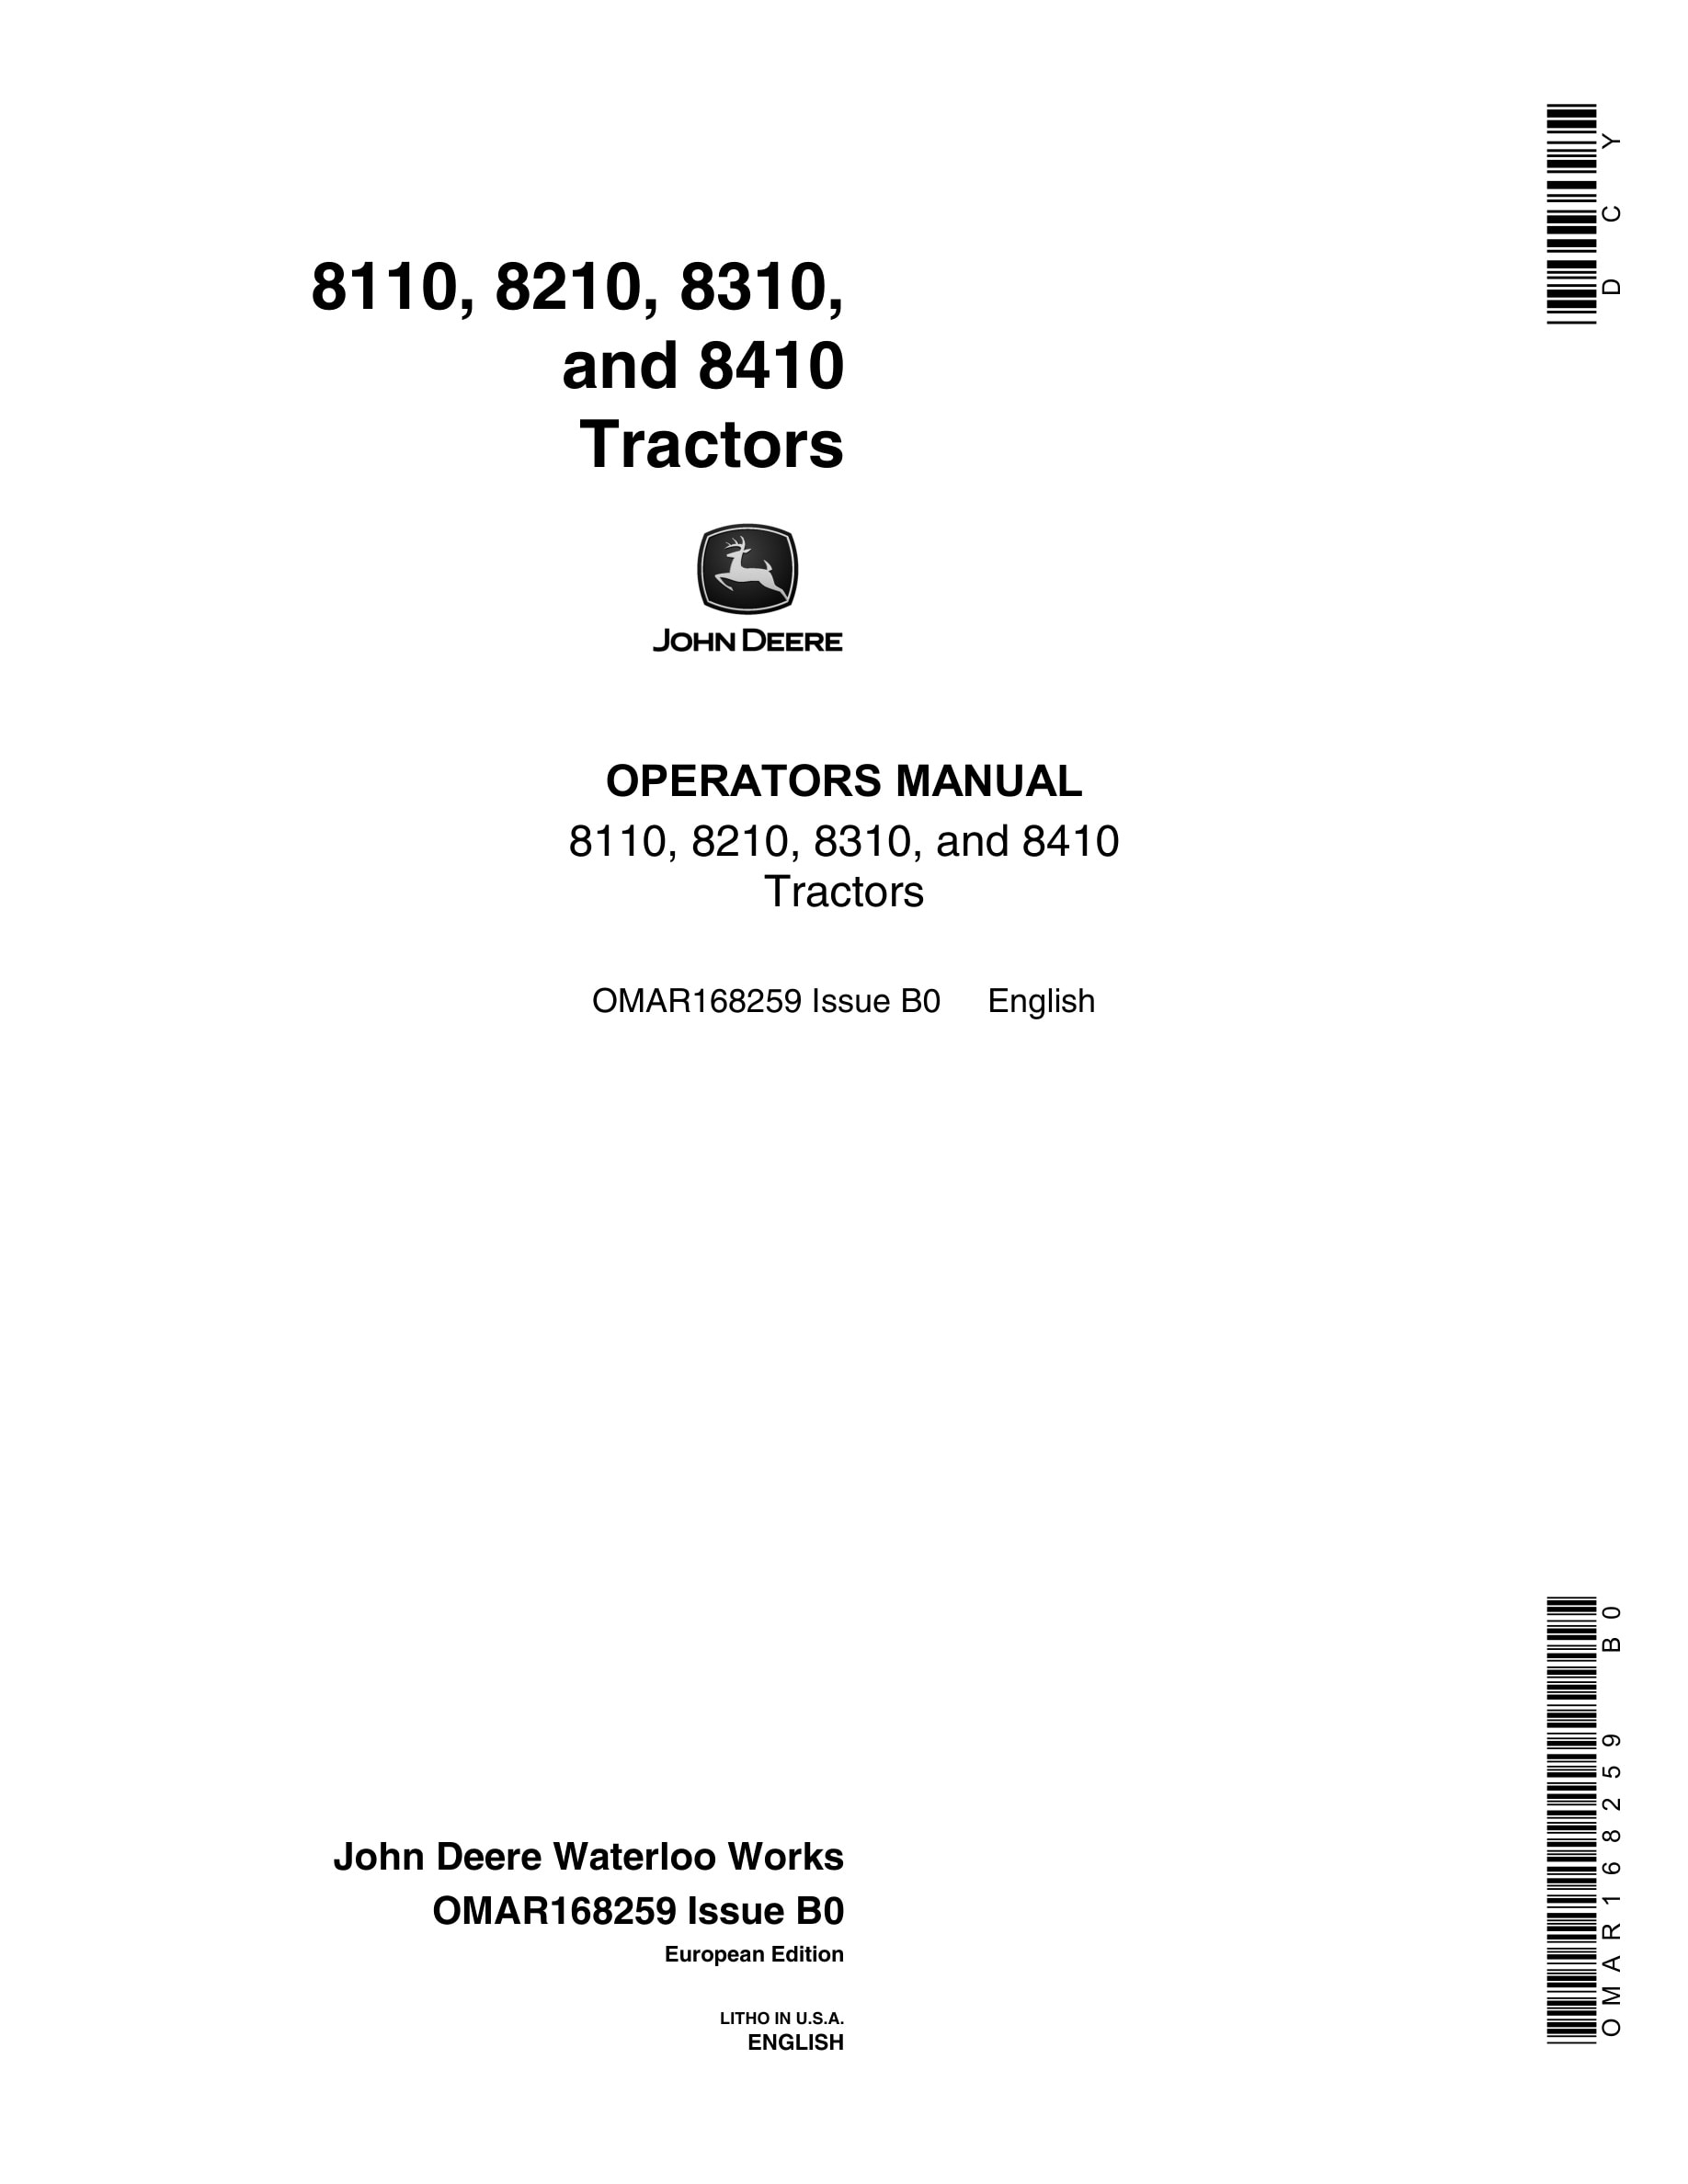 John Deere 8100, 8200, 8300 And 8400 Tractors Operator Manuals OMAR168259-1